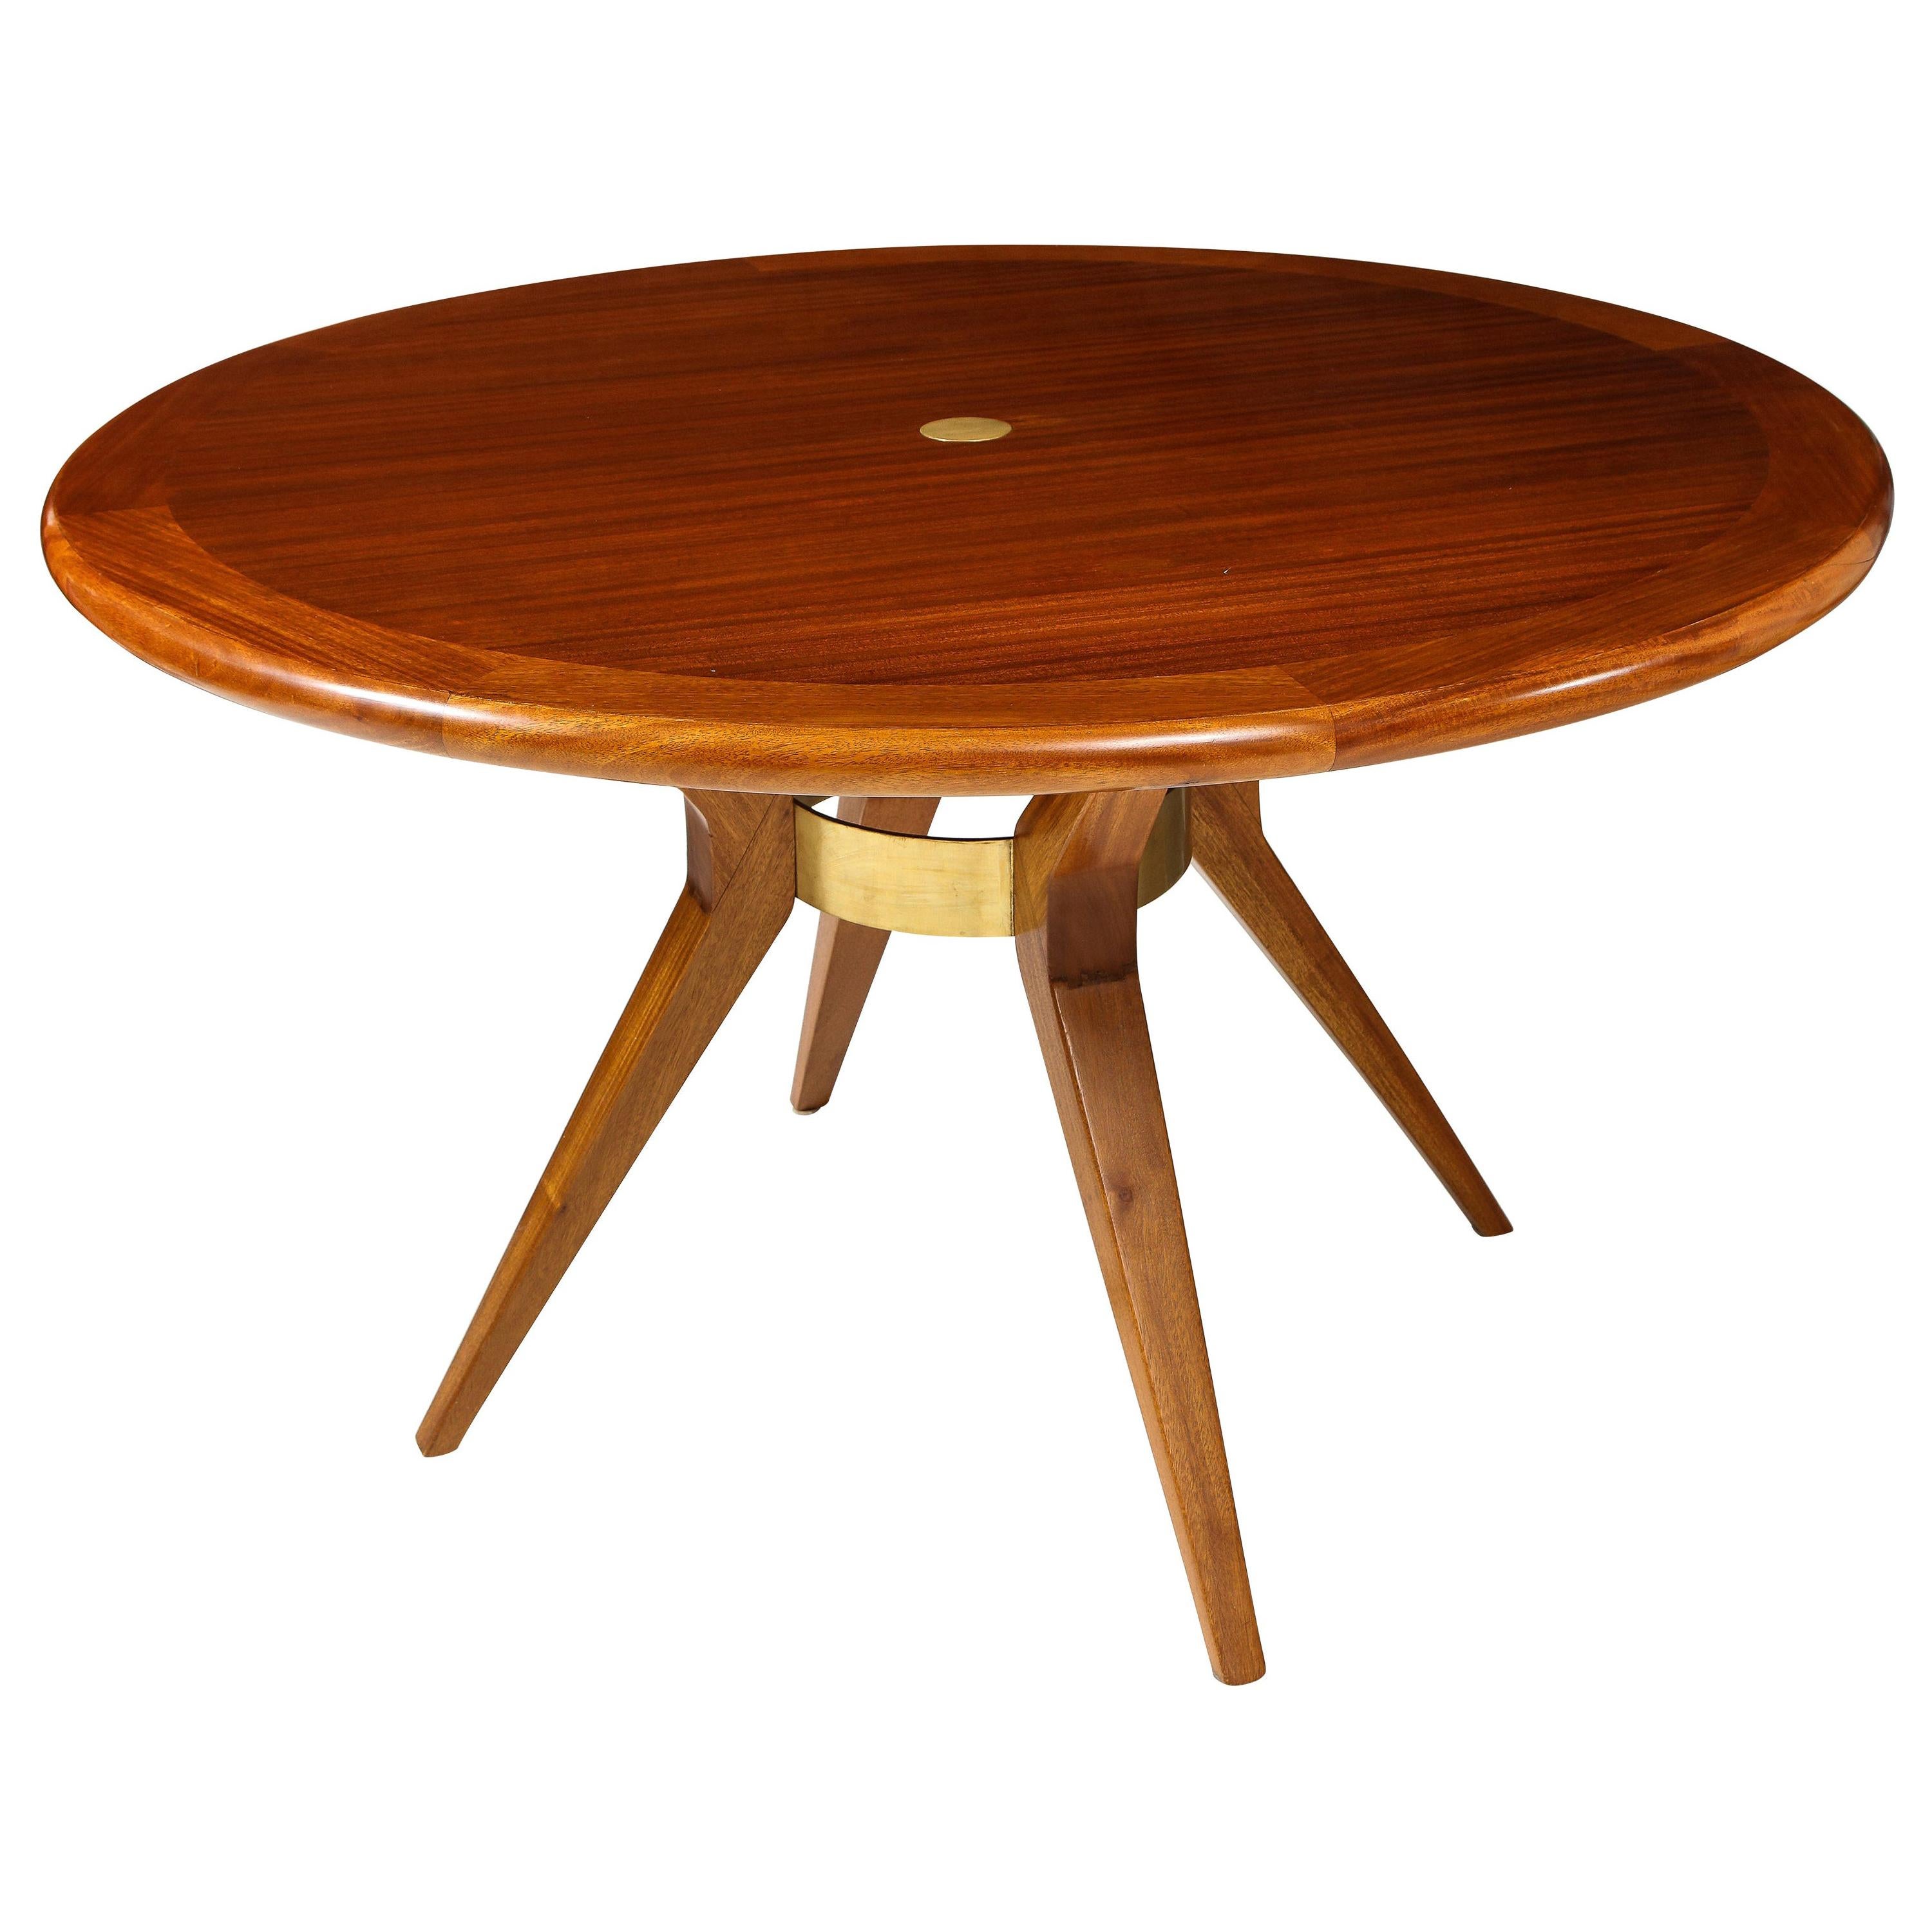 Italian Mid-Century Modern Circular Dining Table/ Center Table